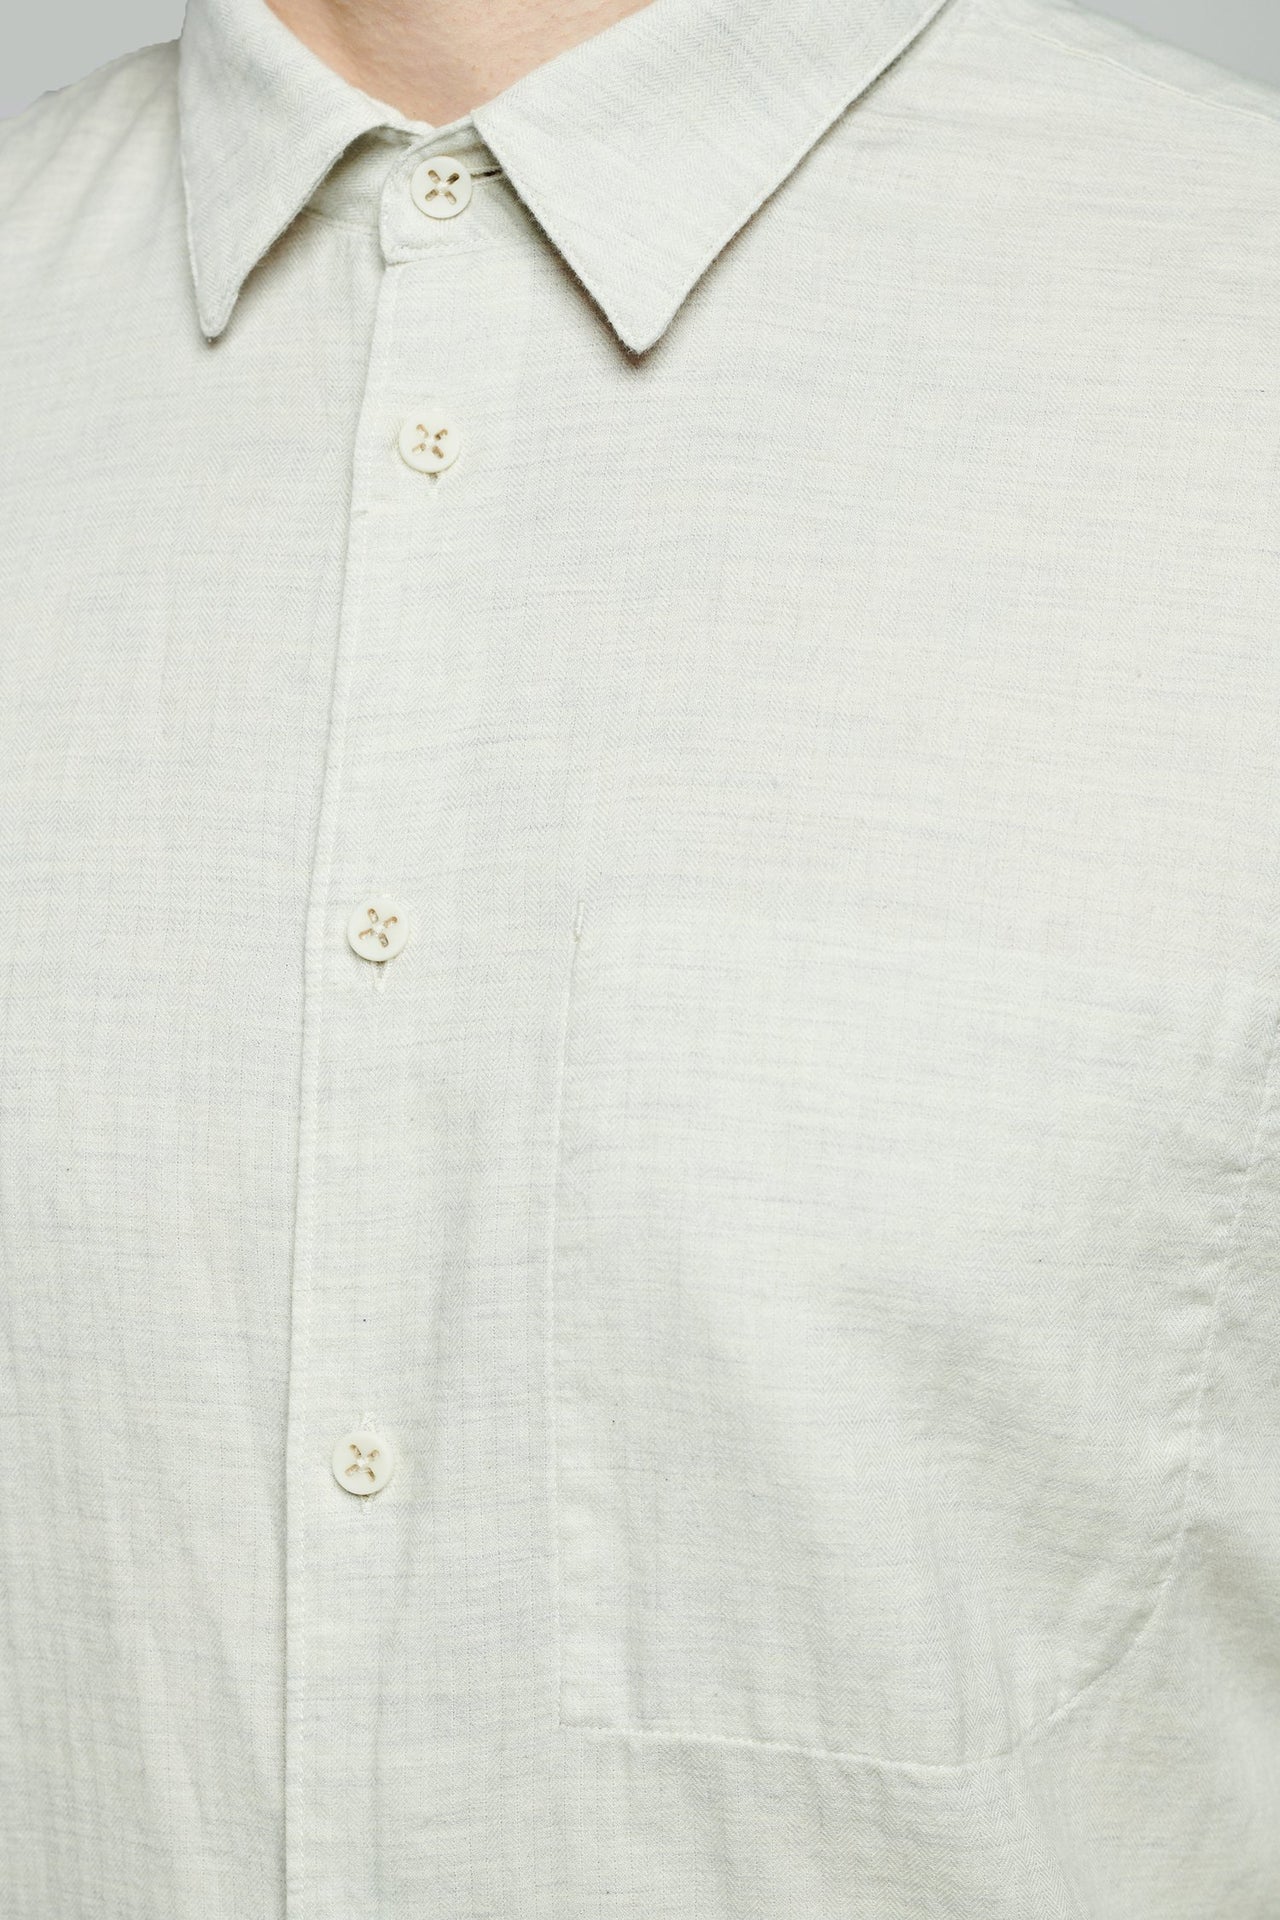 Feel Good Shirt in a Pastel Blue Japanese Organic Herringbone Cotton